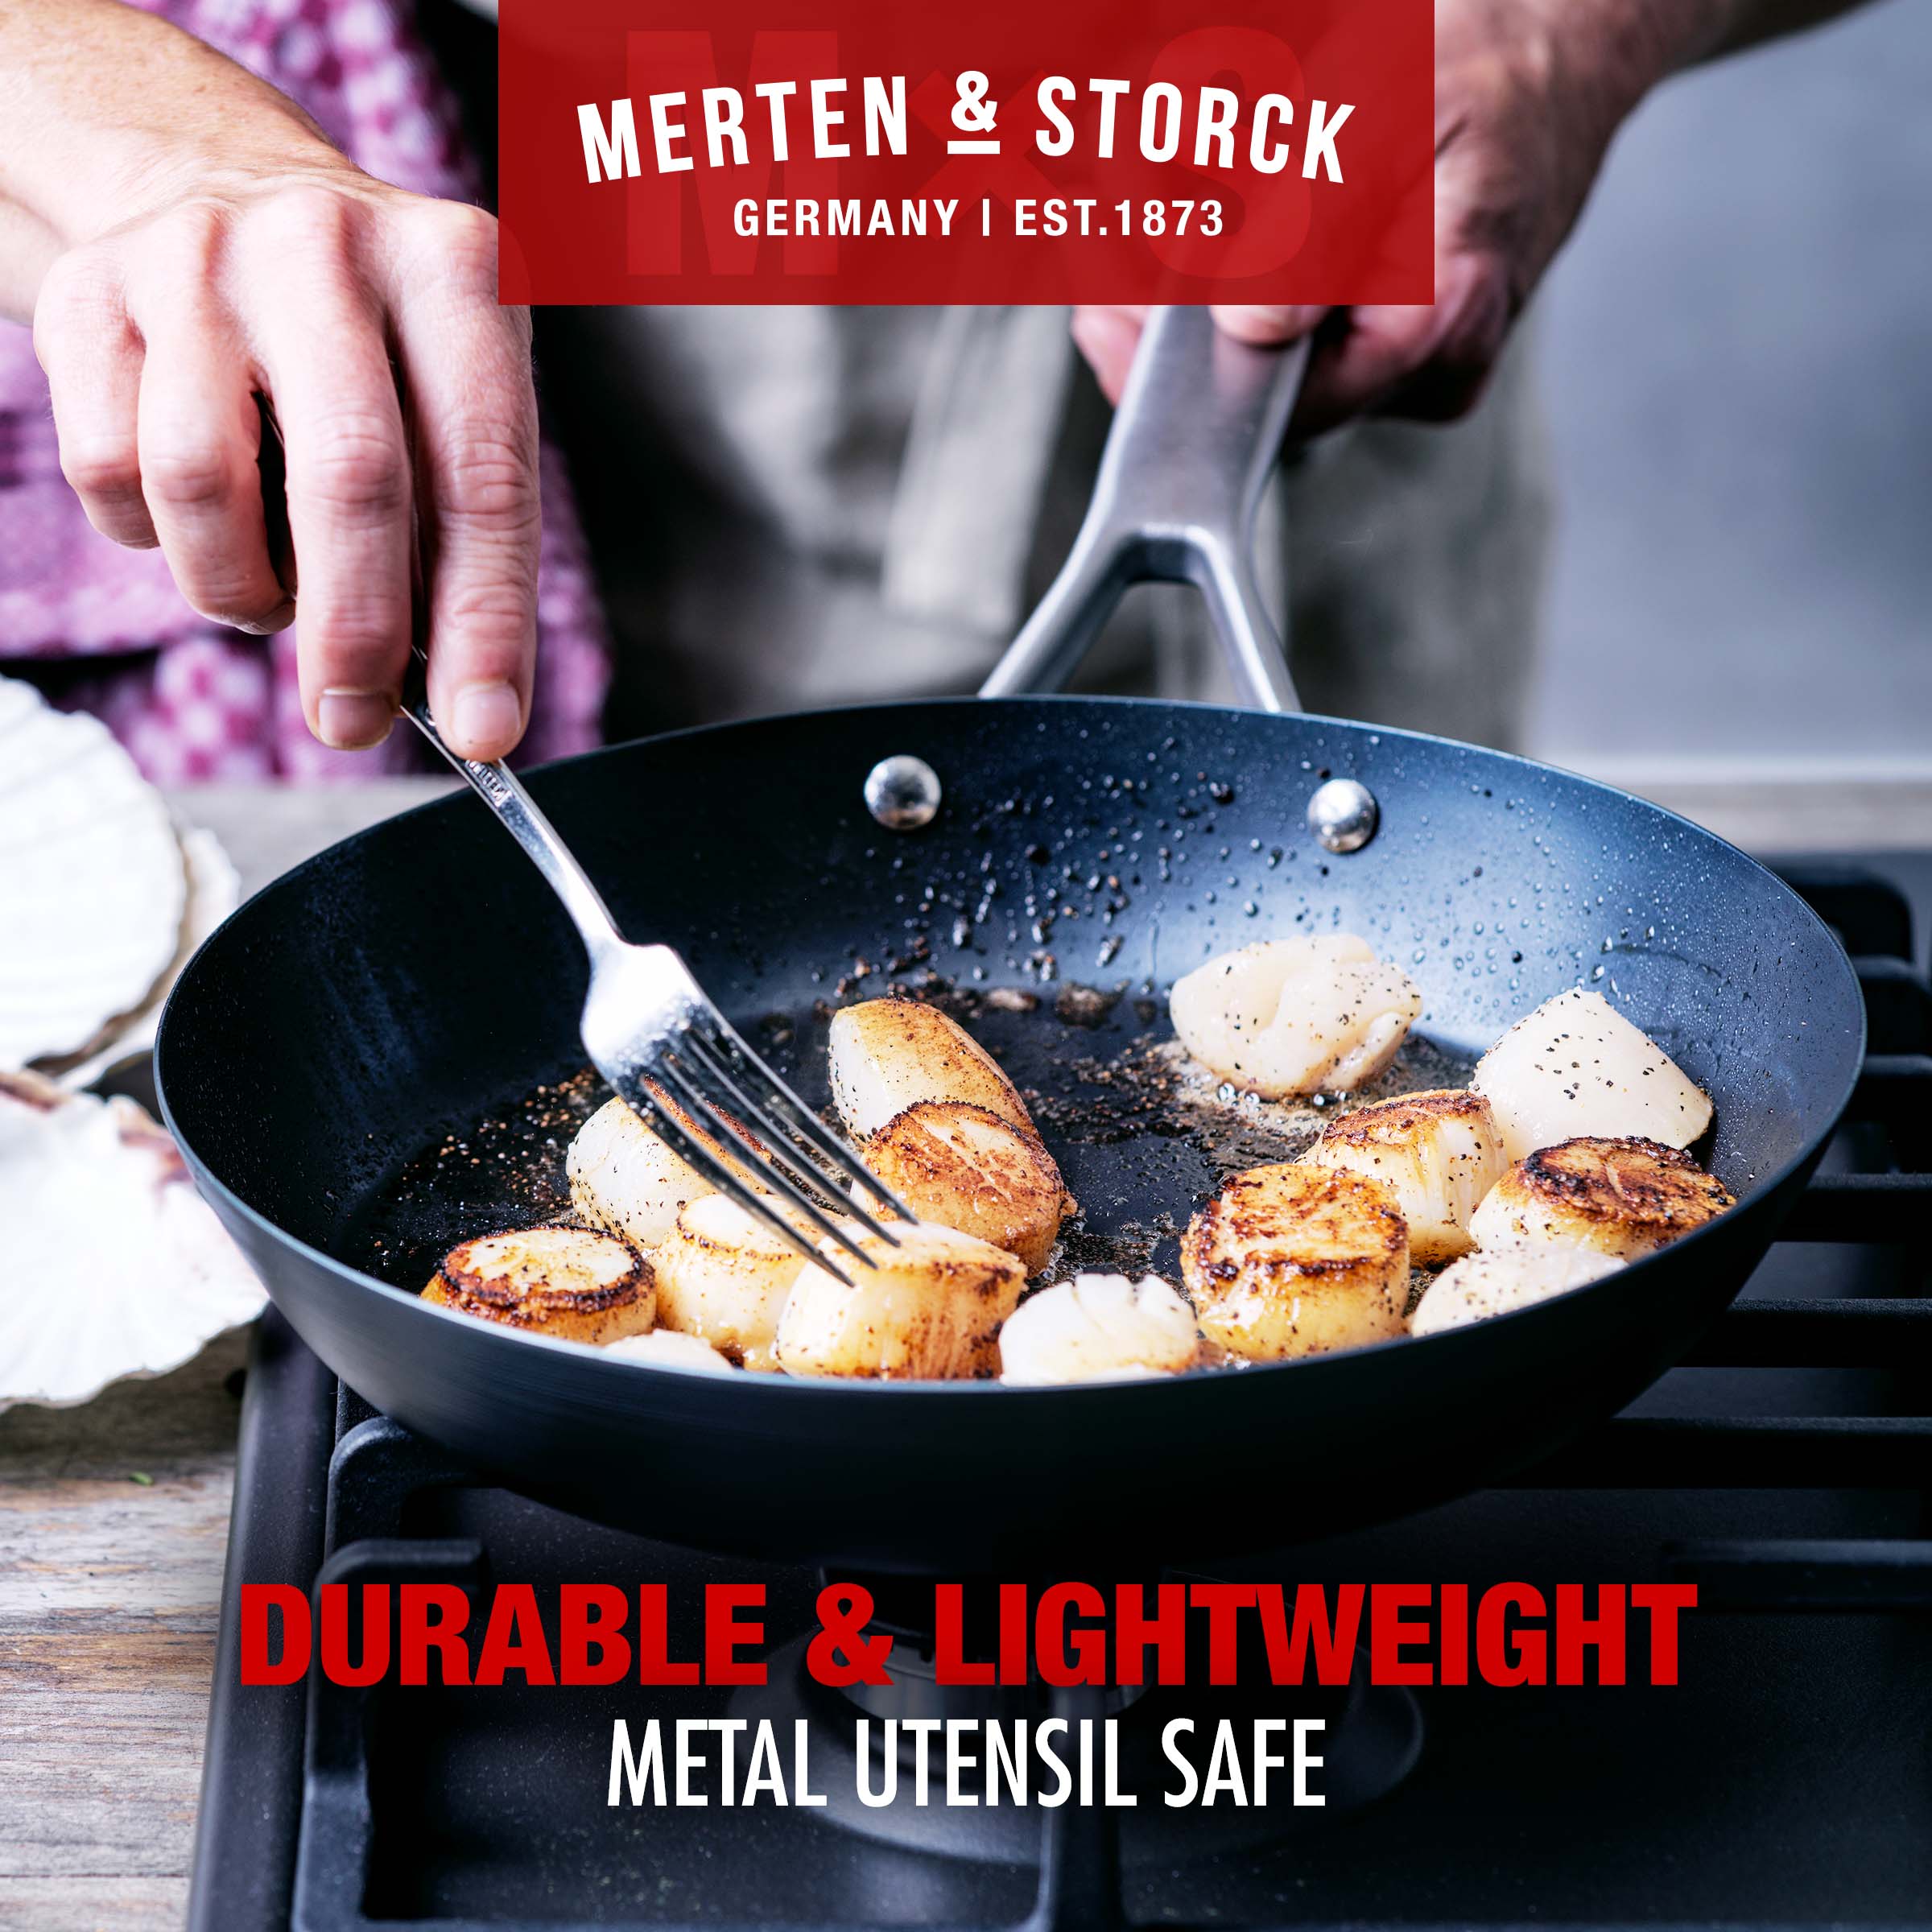 Merten & Storck Pre-Seasoned Carbon Steel Pro Induction 10" Frying Pan Skillet, Black - image 4 of 7